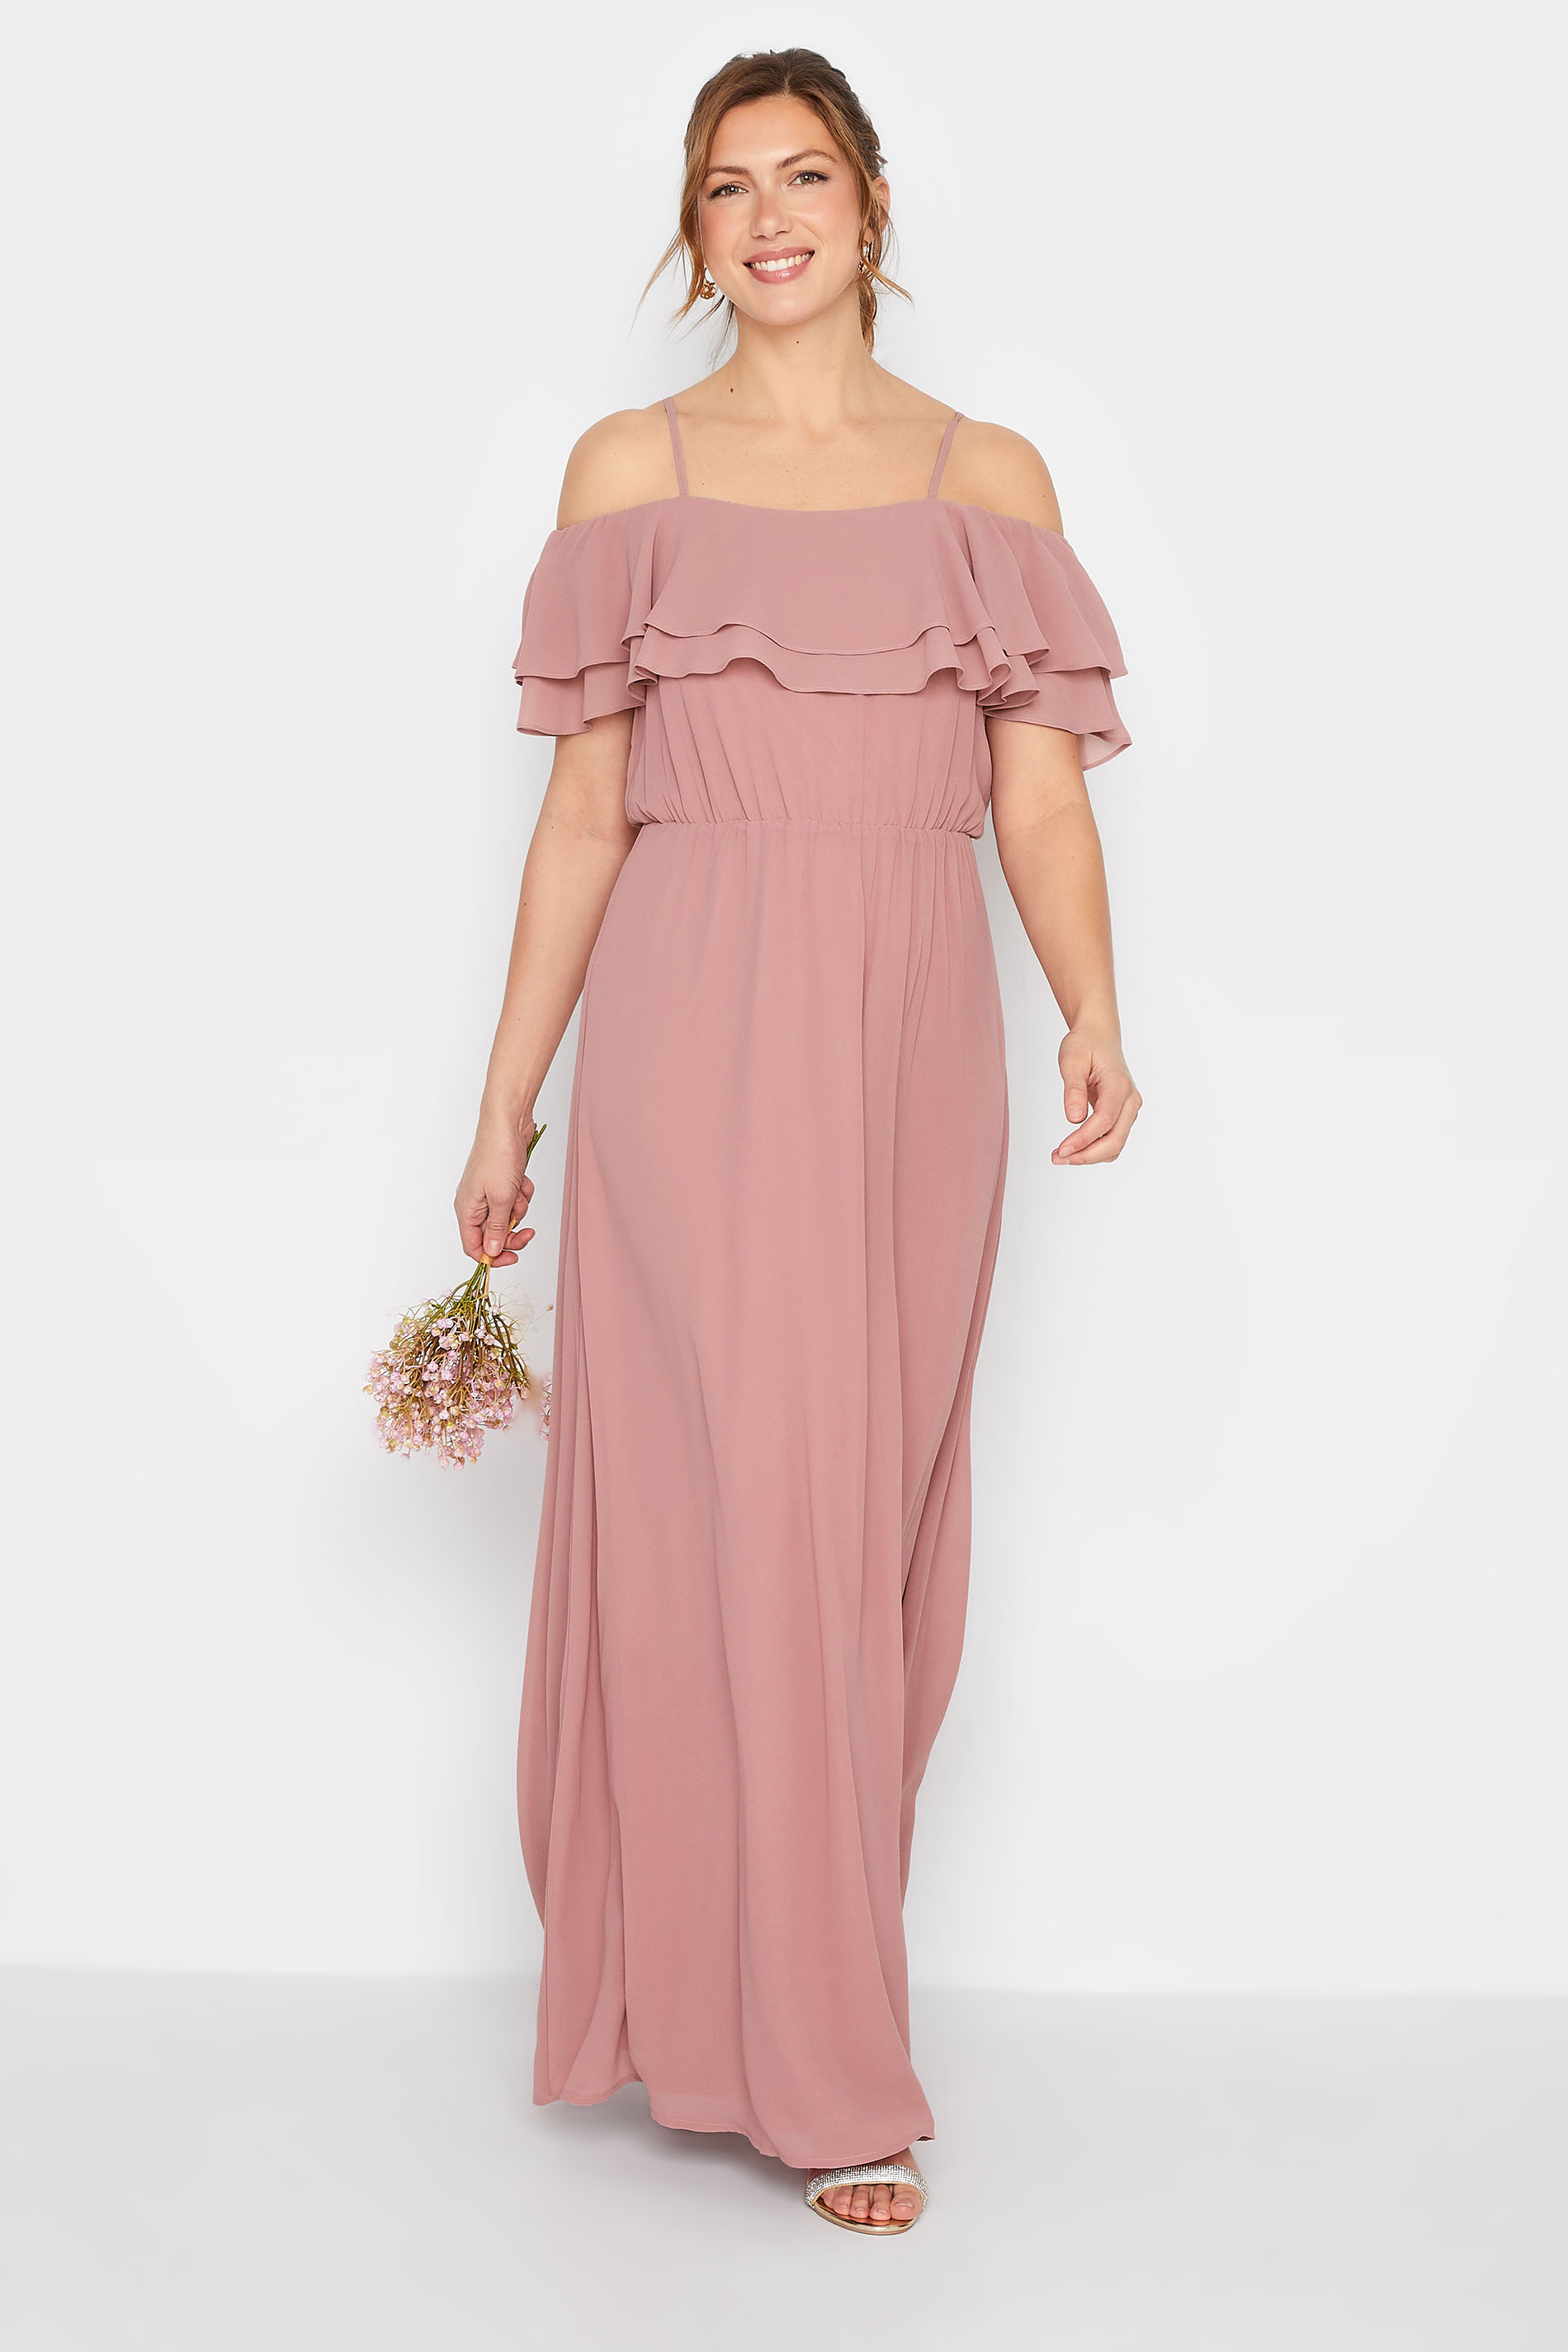 LTS Tall Women's Blush Pink Ruffle Maxi Dress | Long Tall Sally  1